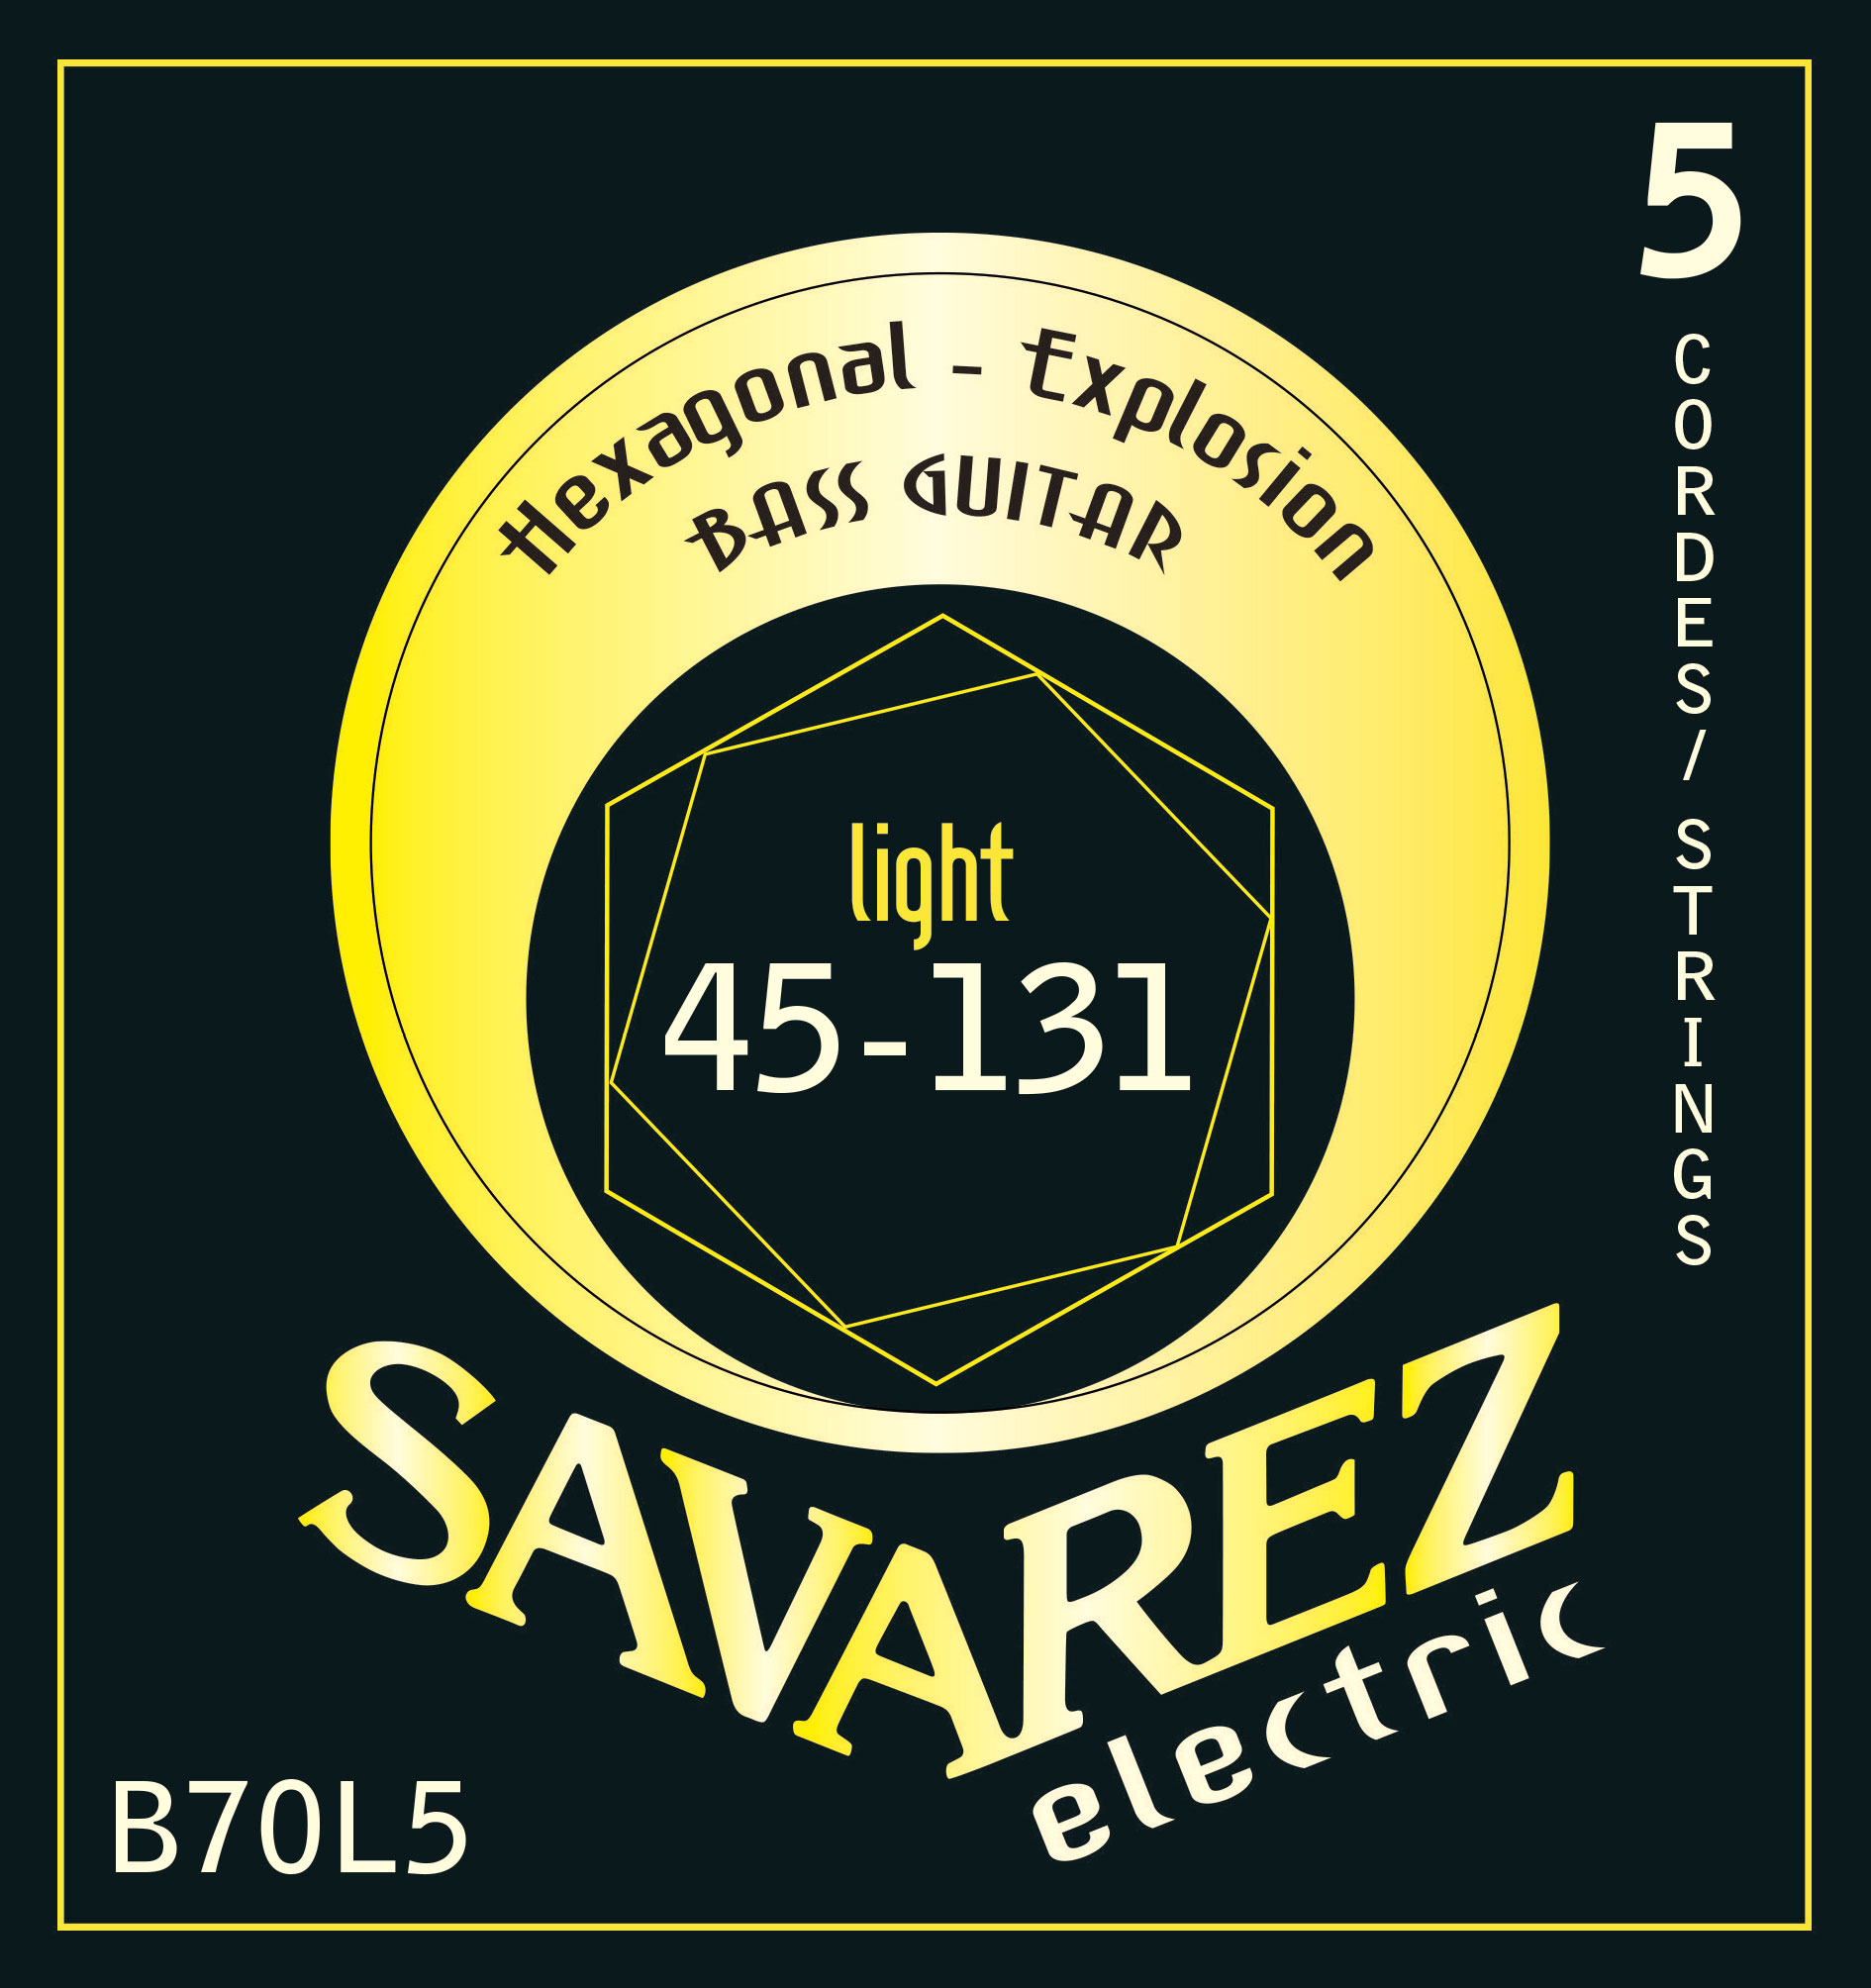 SAVAREZ ELECTRIC HEXAGONAL EXPLOSION BASSE B70L5